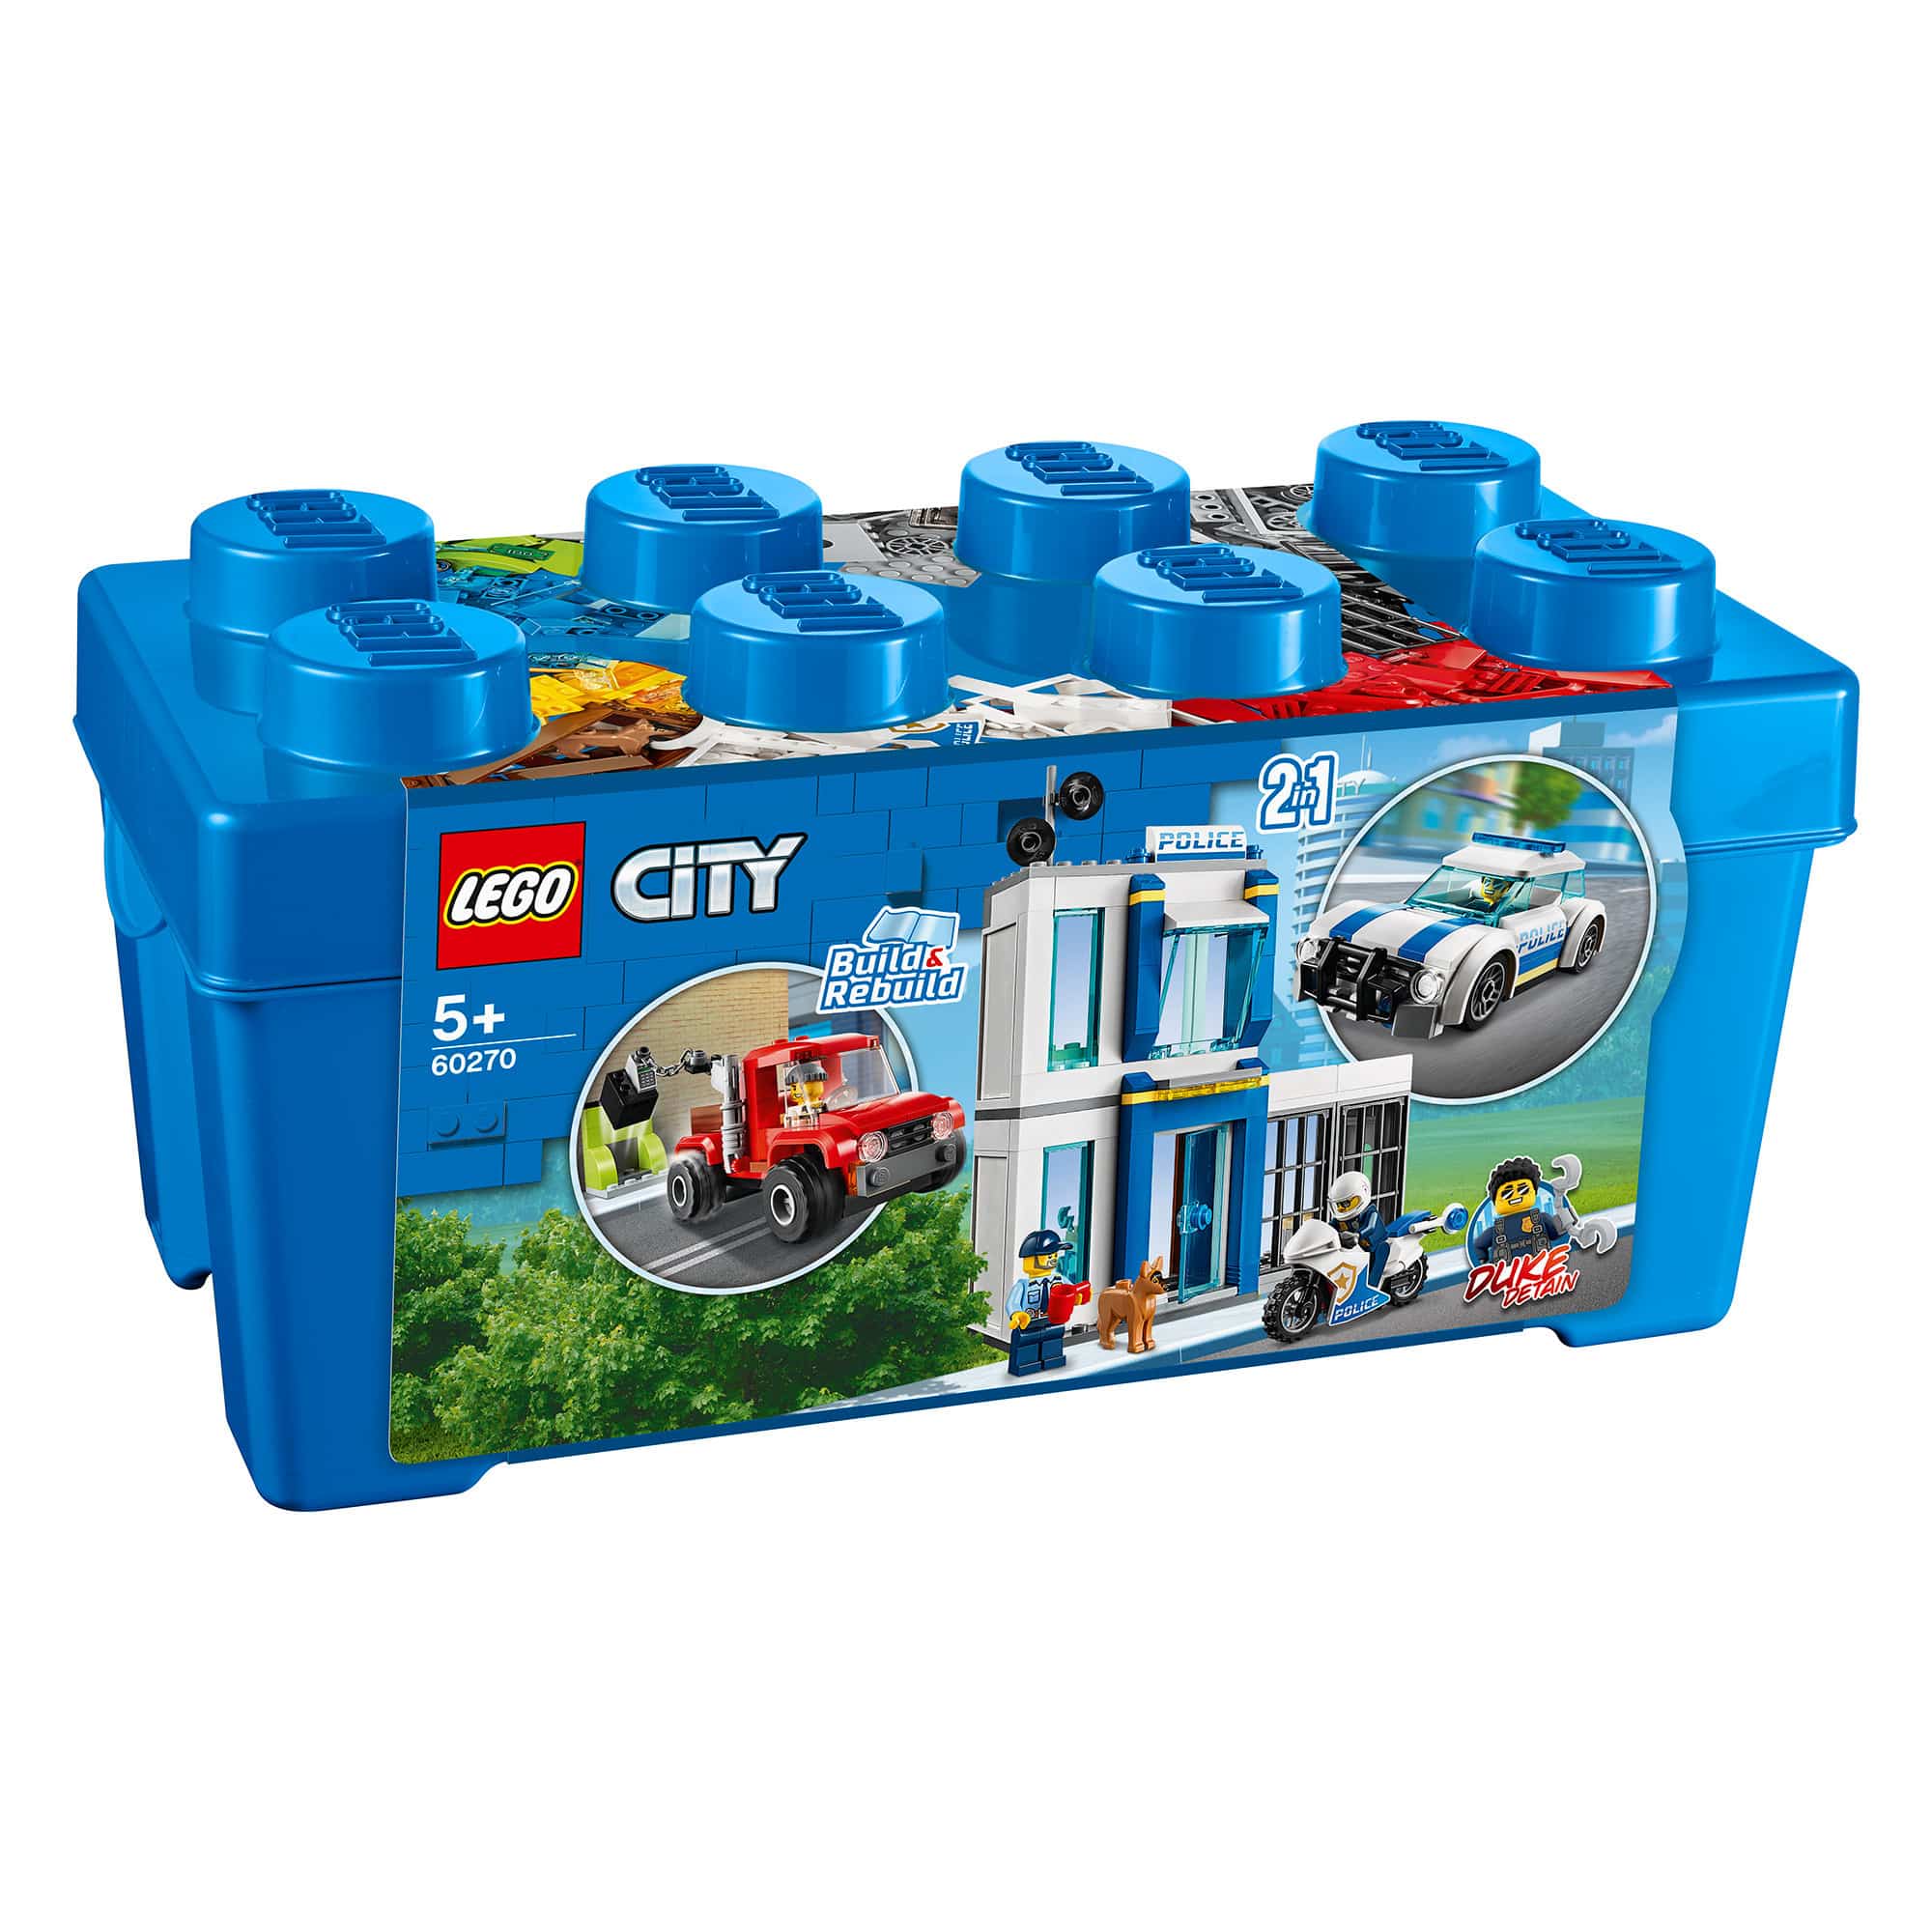 LEGO City - Police - 60270 Police Brick Box